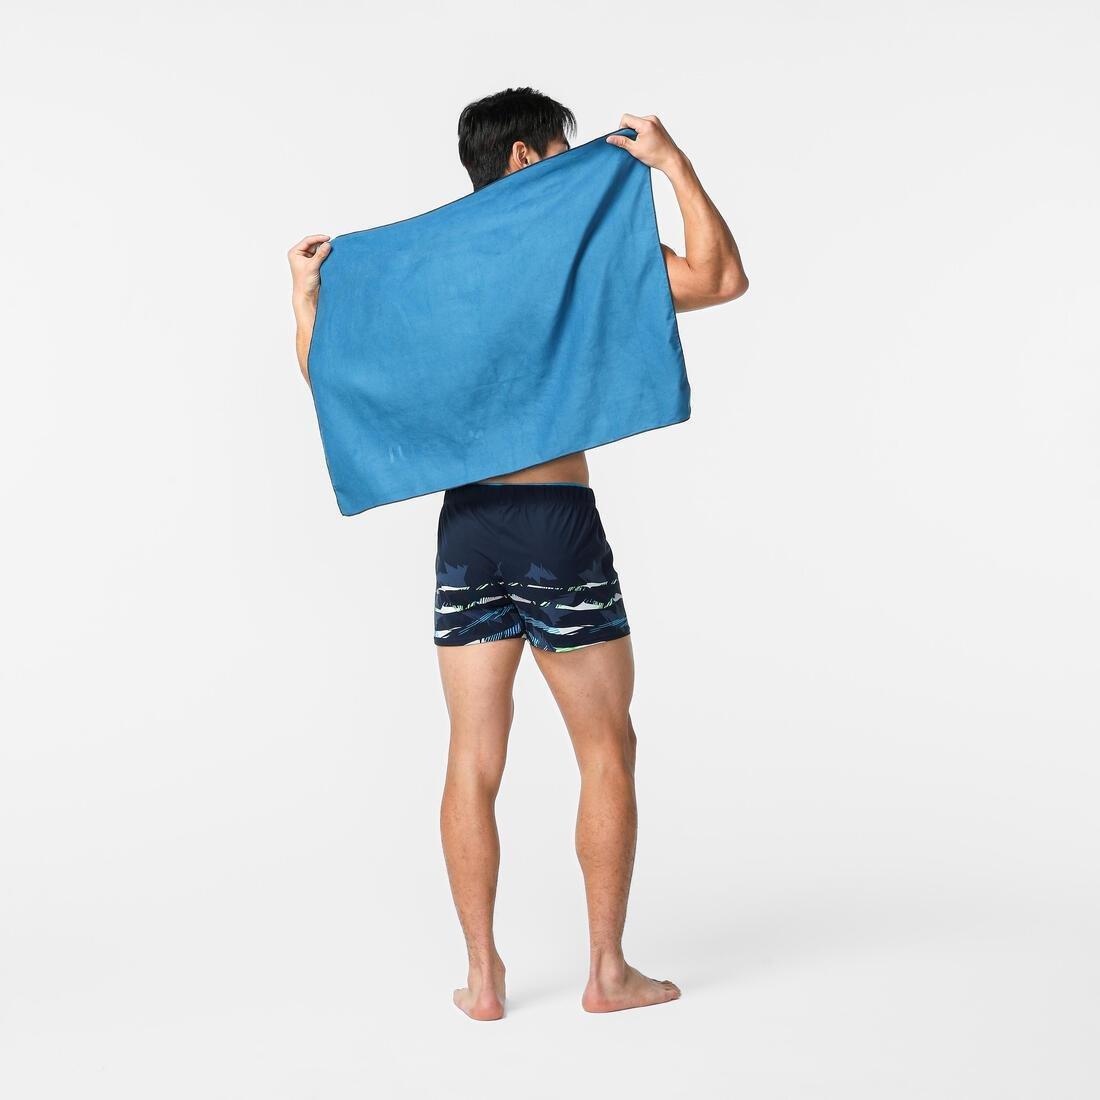 NABAIJI - Swimming Microfibre Towel - Size S 39 X 55 Cm, Green